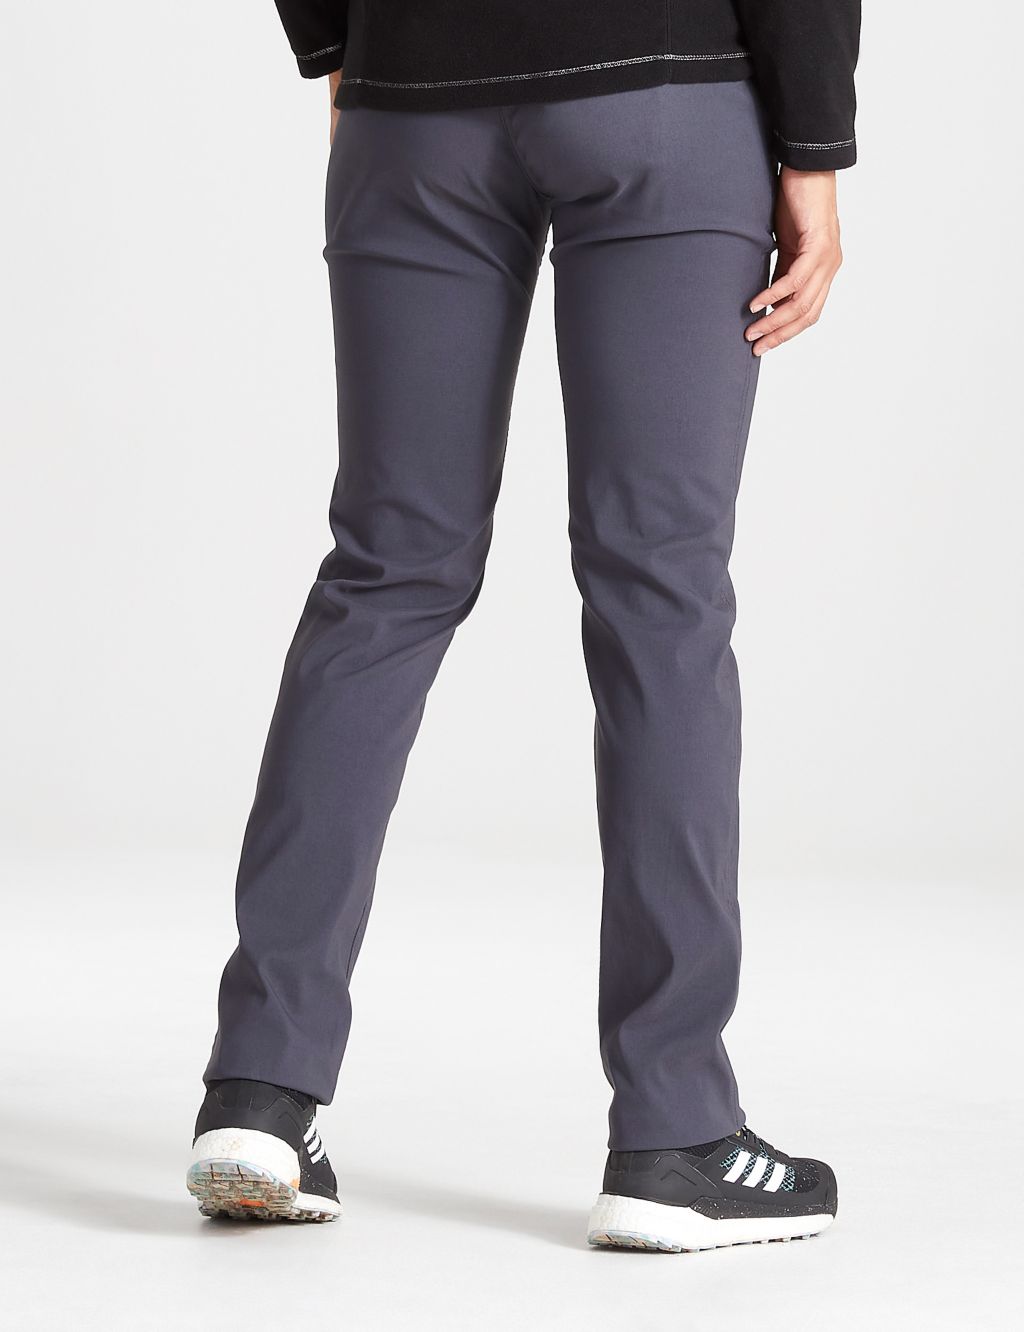 Kiwi Pro Tapered Trousers image 4